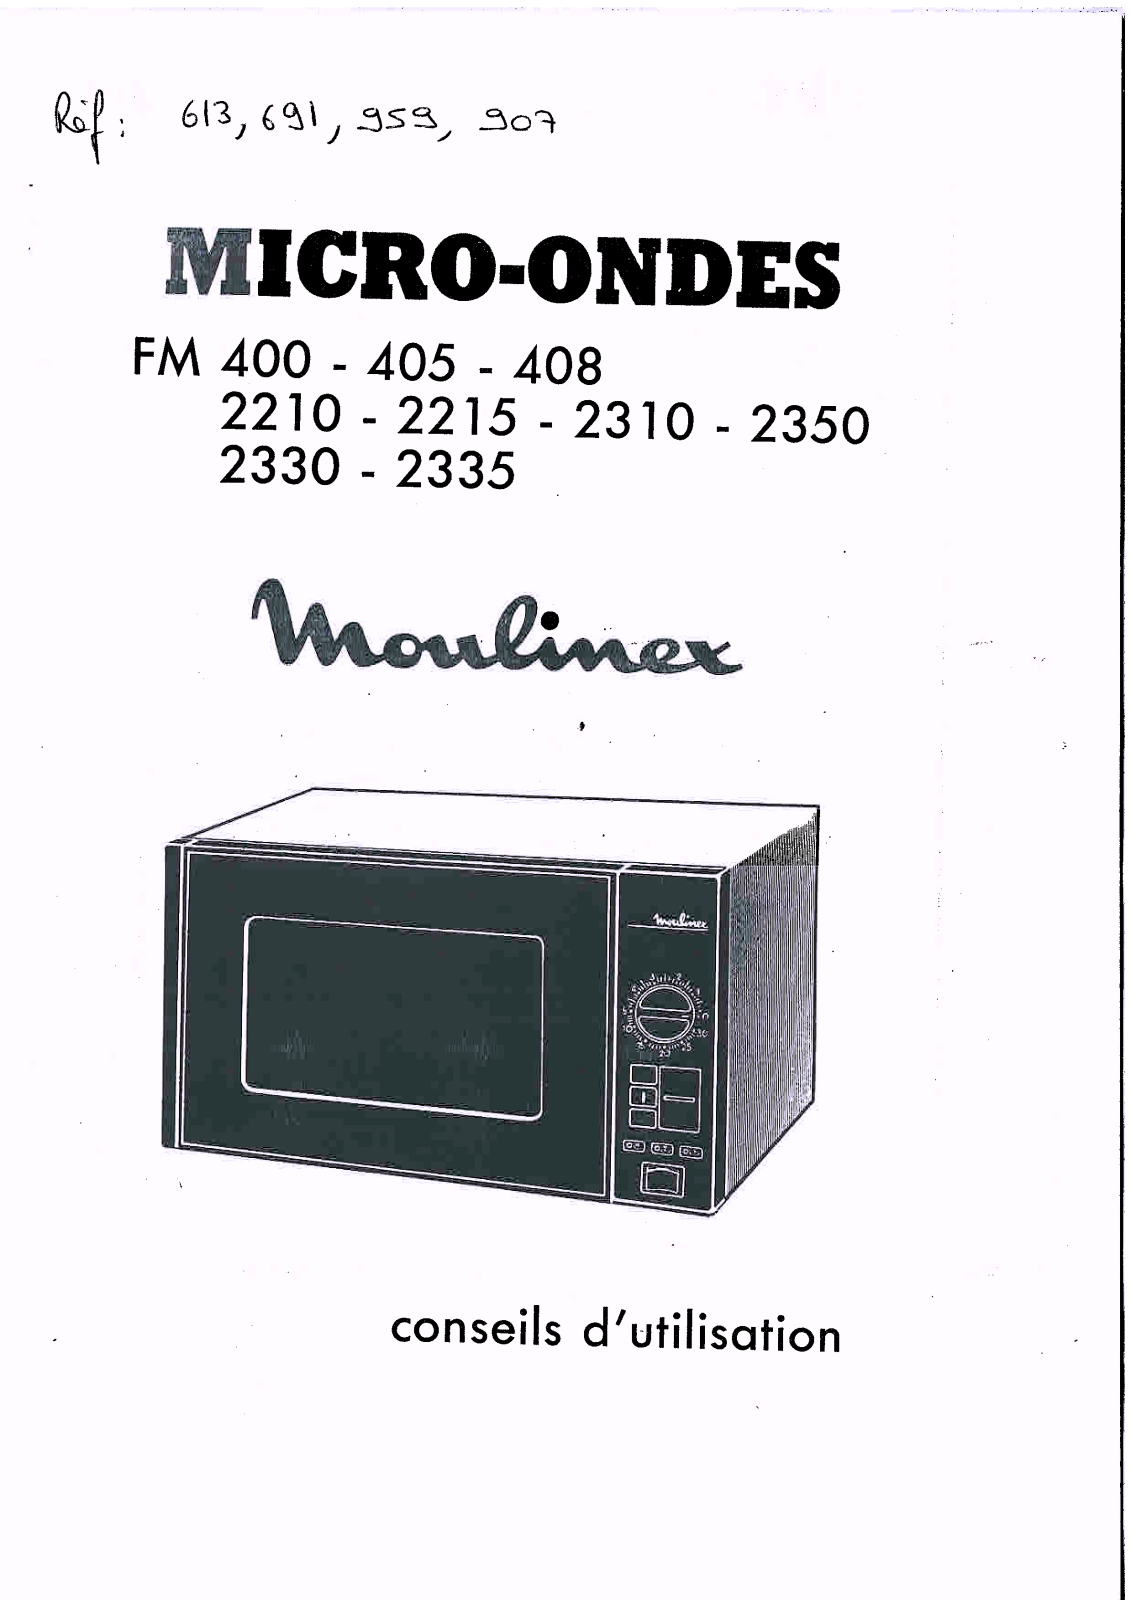 MOULINEX FM2210, FM2215, FM2310, FM2330, FM2335 User Manual